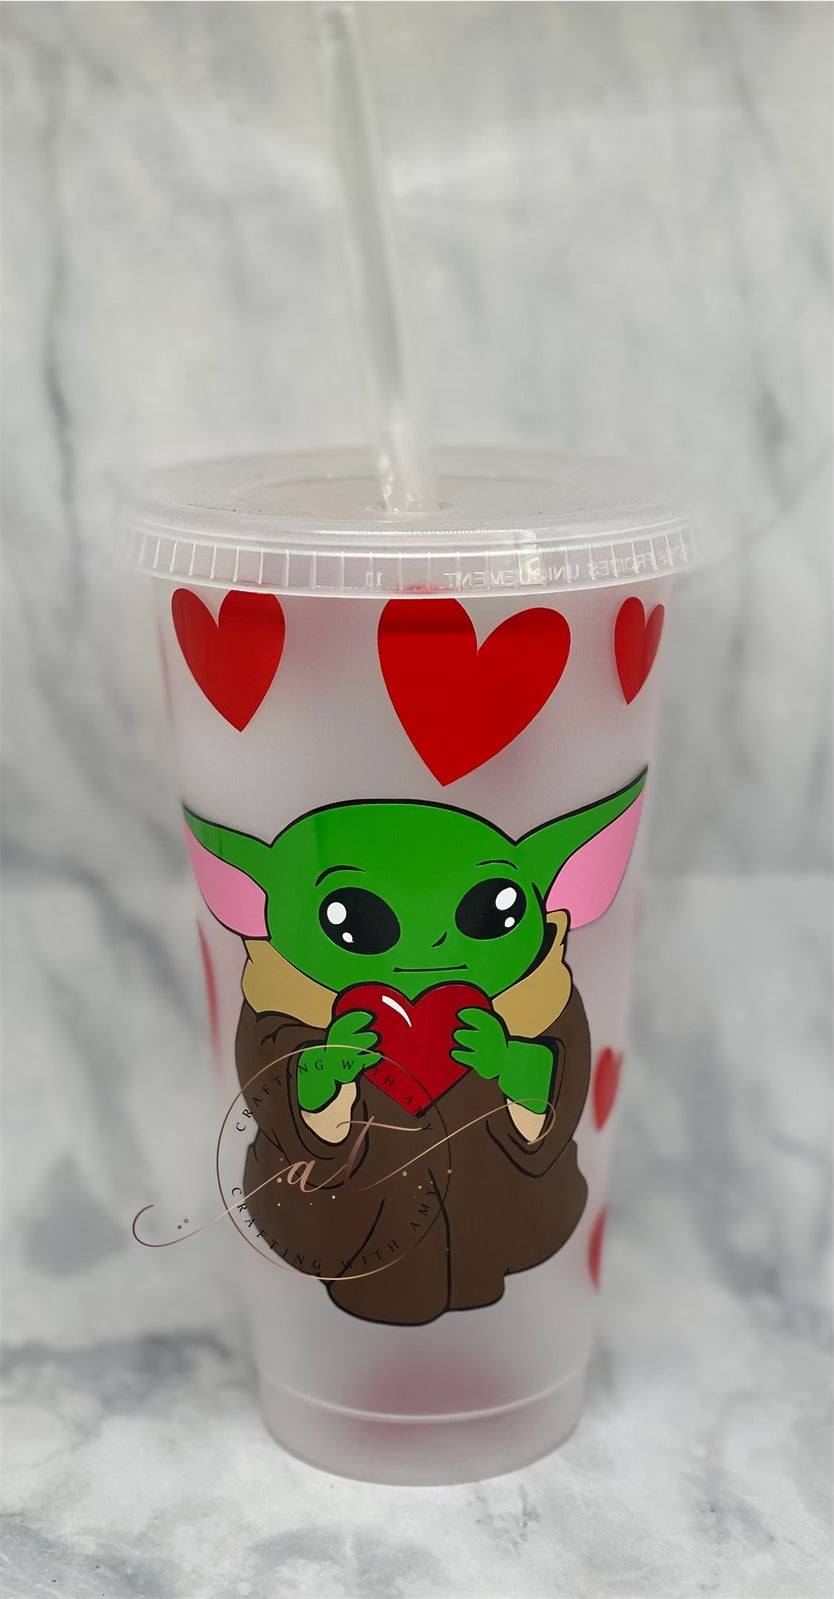 The Mandalorian's Grogu Baby Yoda Cold Cup